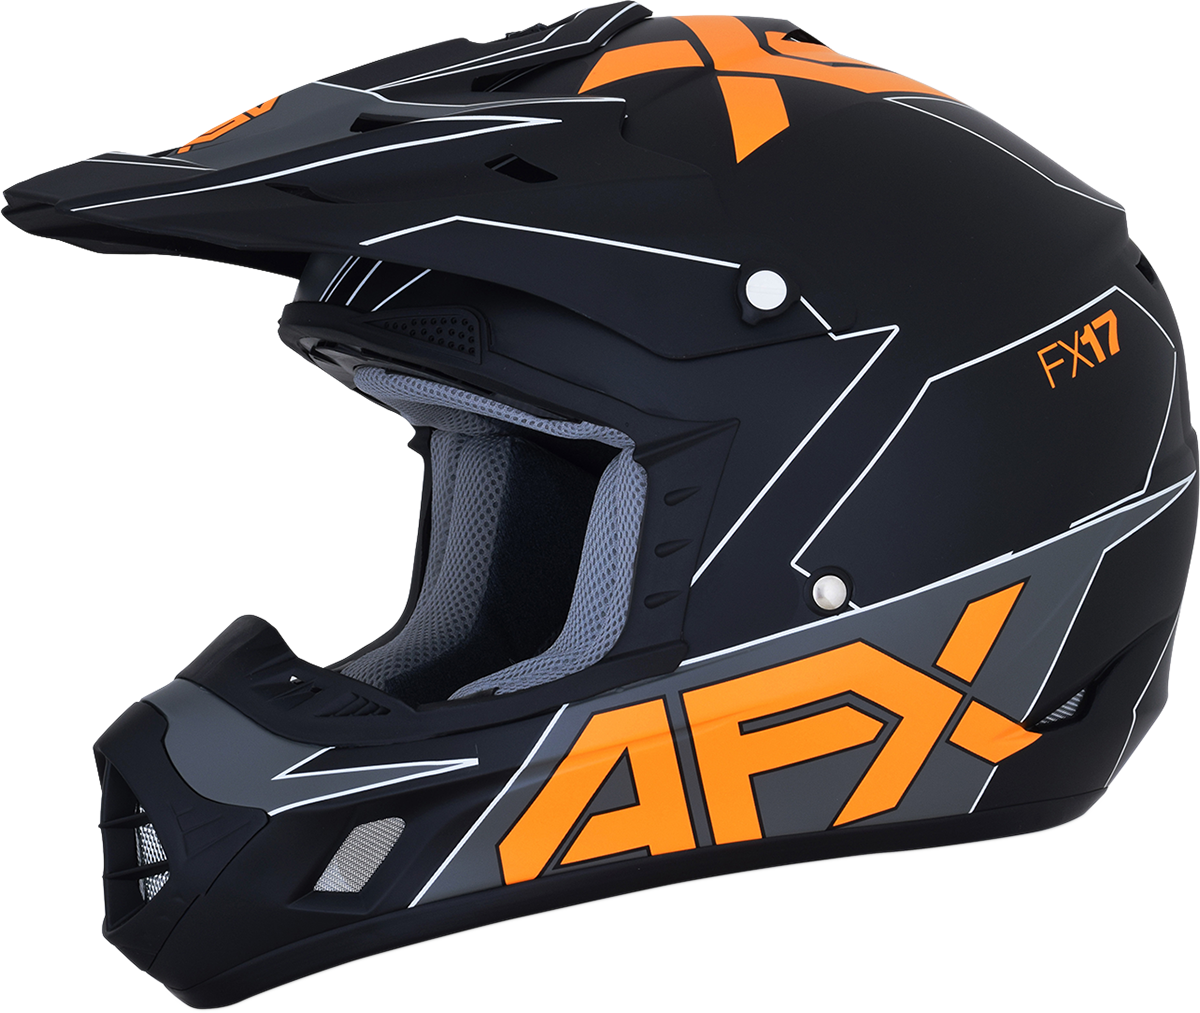 AFX FX-17 Helmet - Aced - Matte Black/Orange - Small 0110-6504